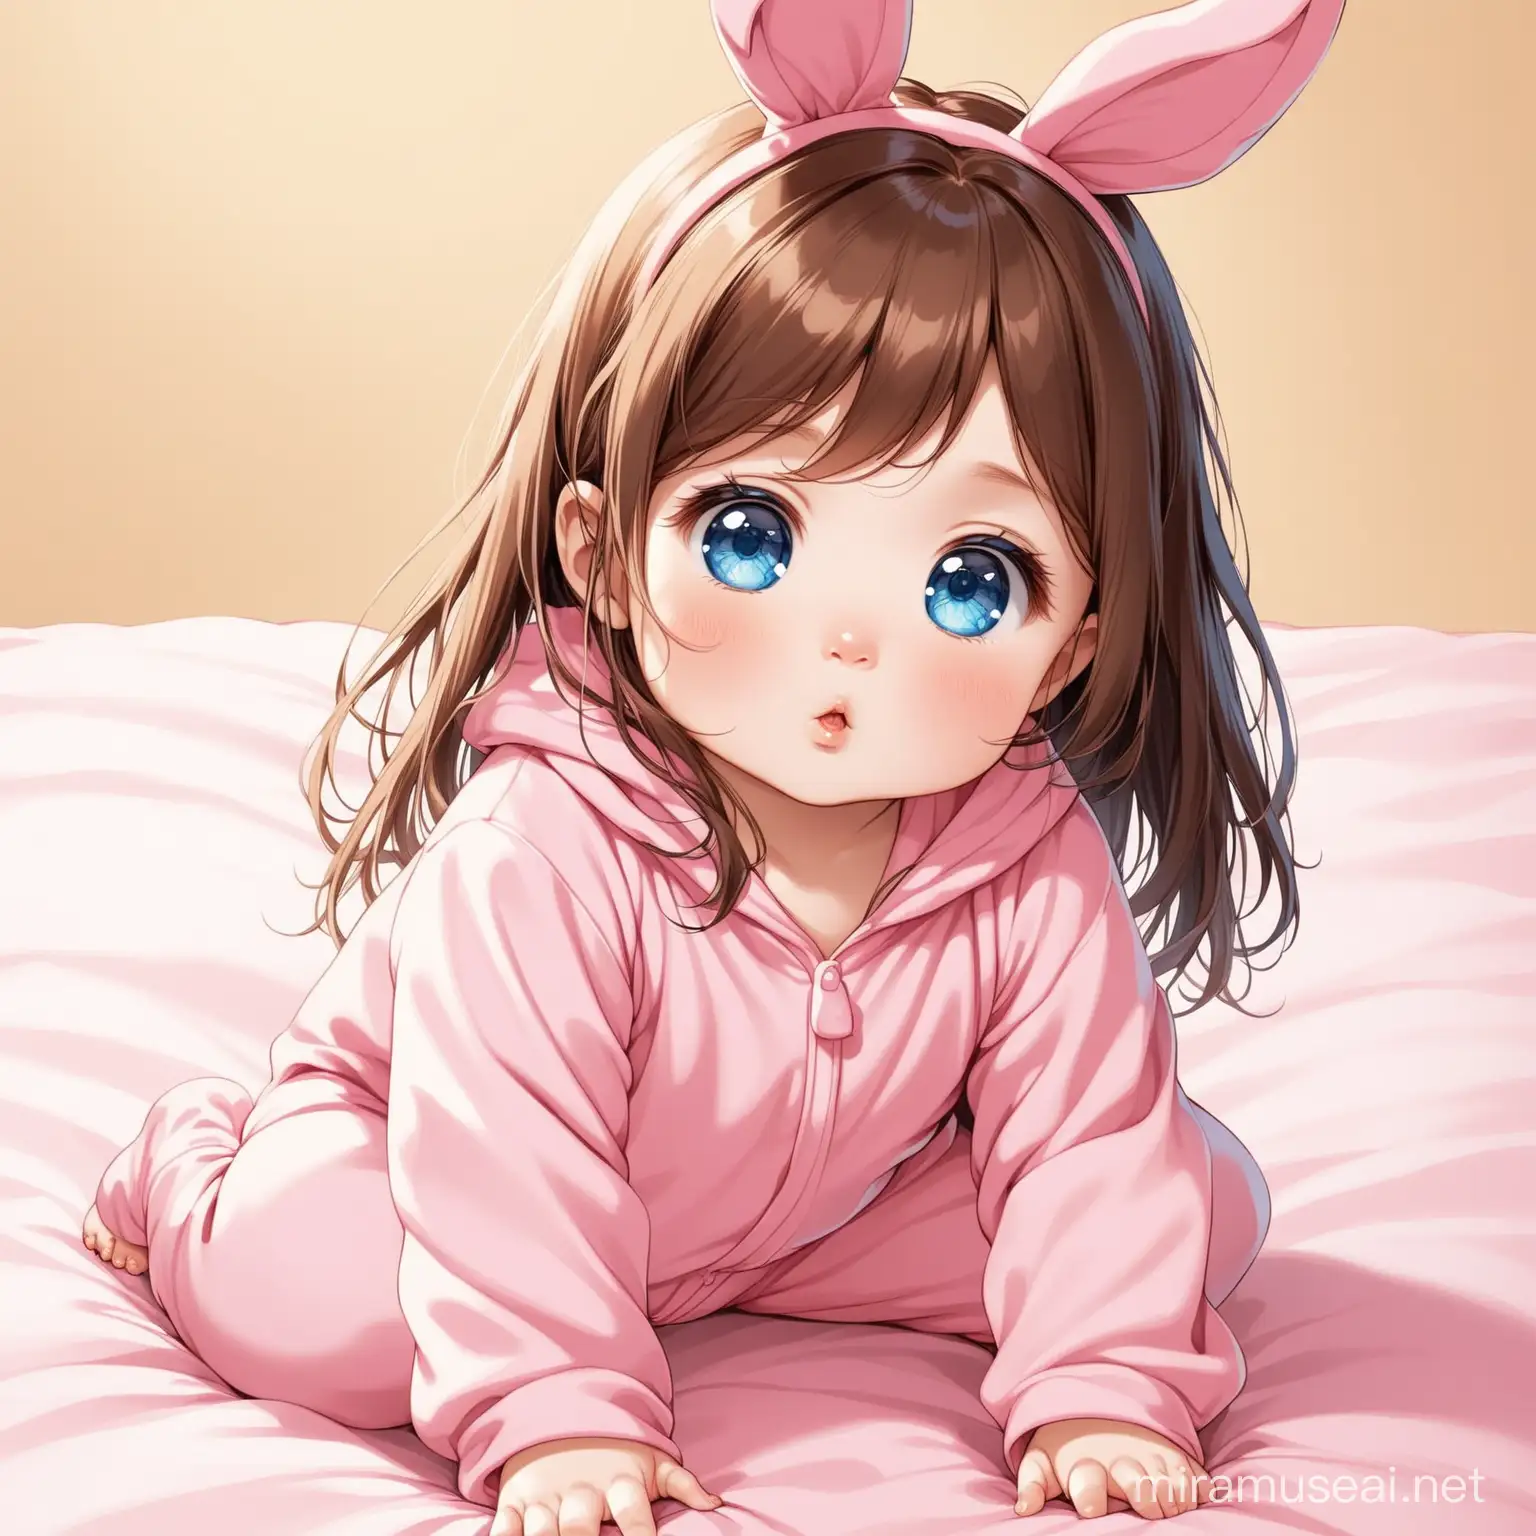 Cute baby girl with blue eyes, messy long brown hair wearing a pink bunny onsie.